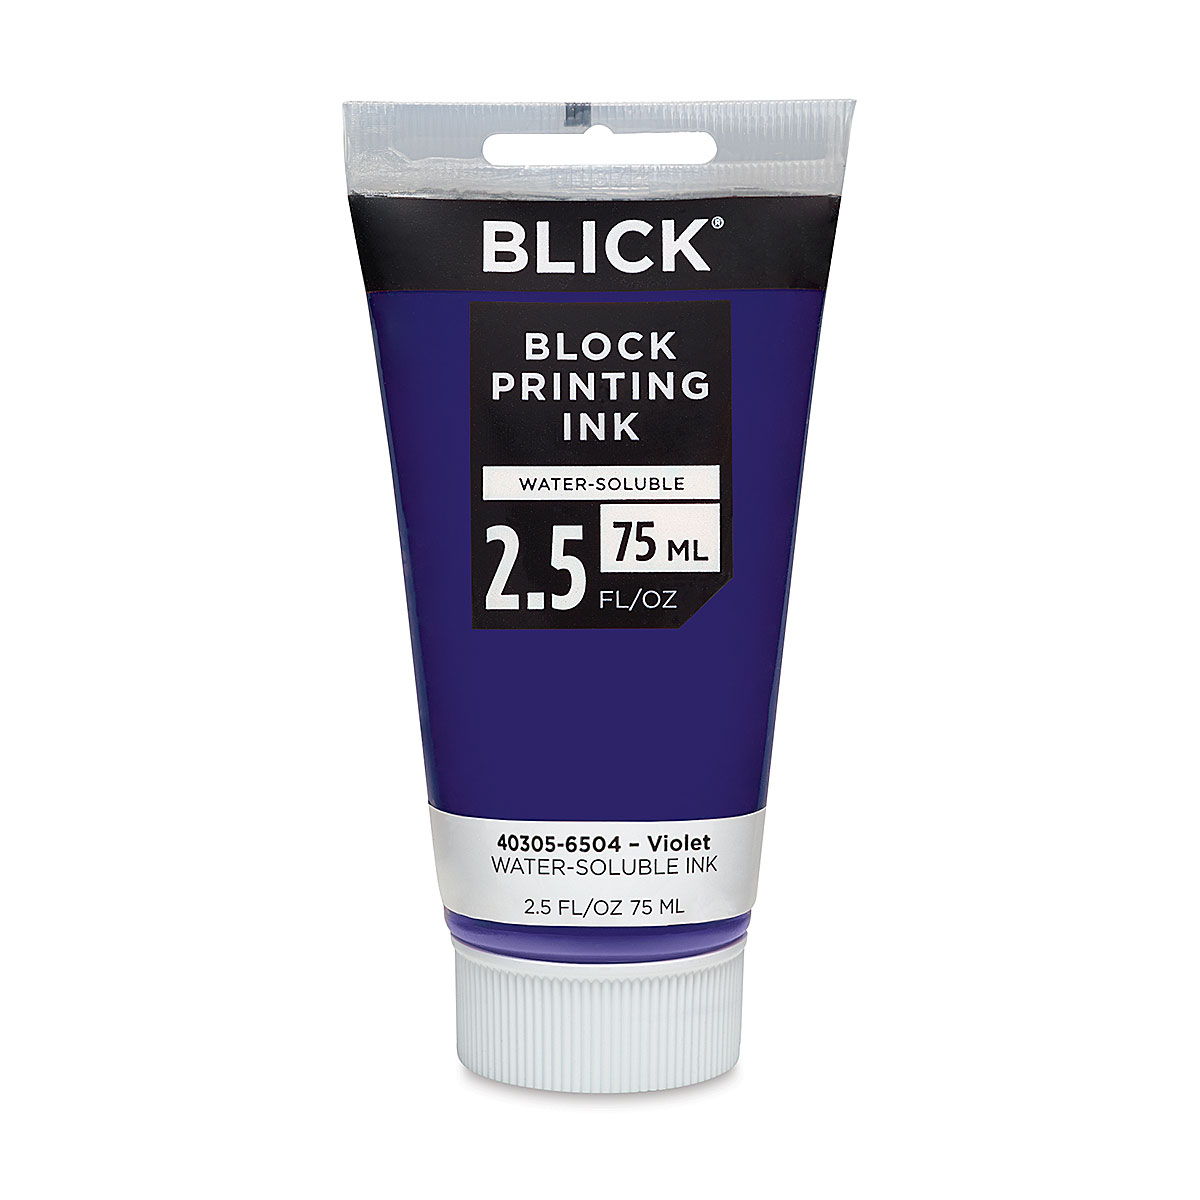 Blick Water-Soluble Block Printing Inks